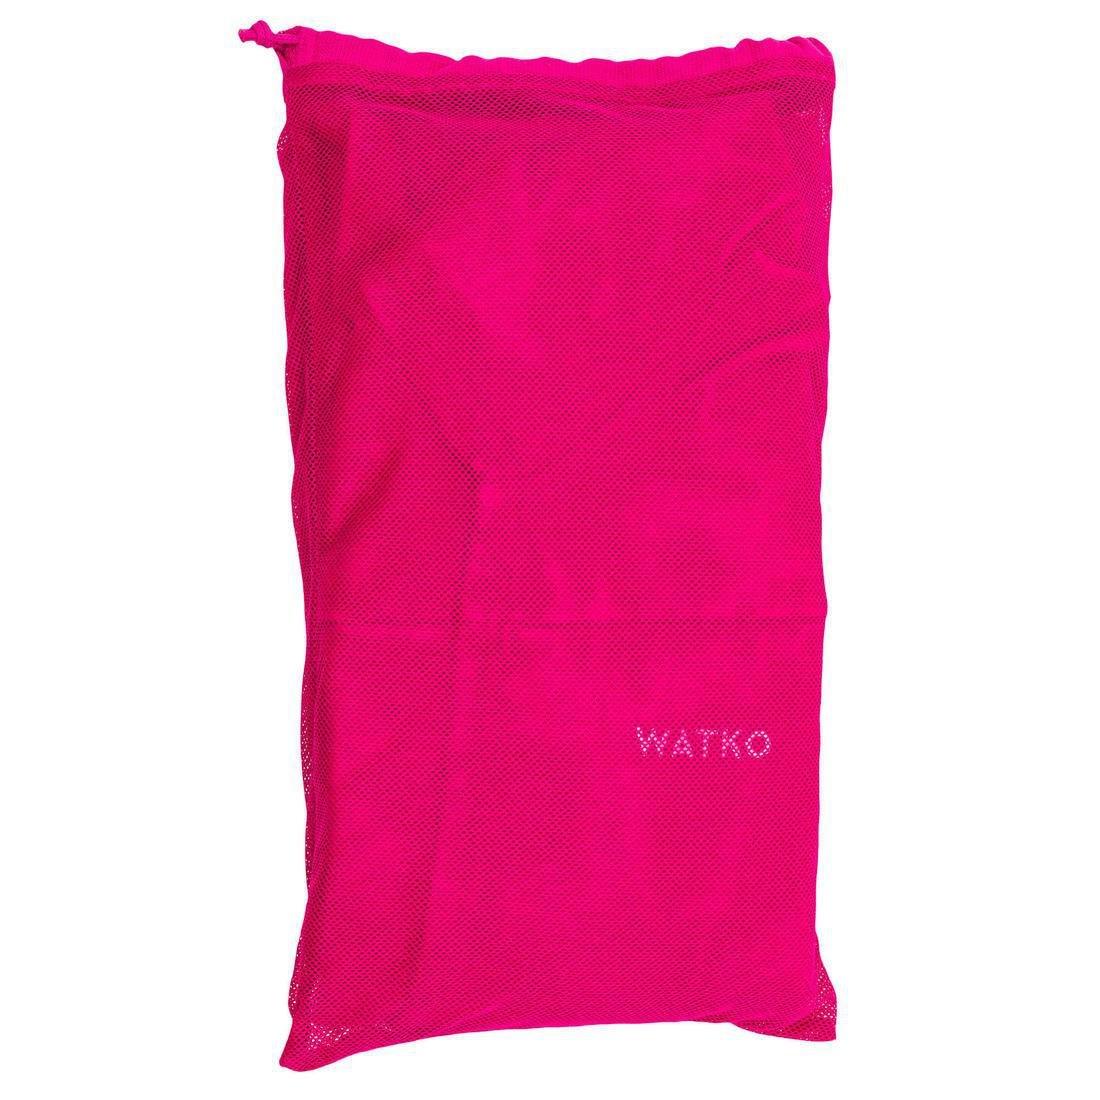 WATKO - Women's Organic Cotton Pool Bathrobe, Pink